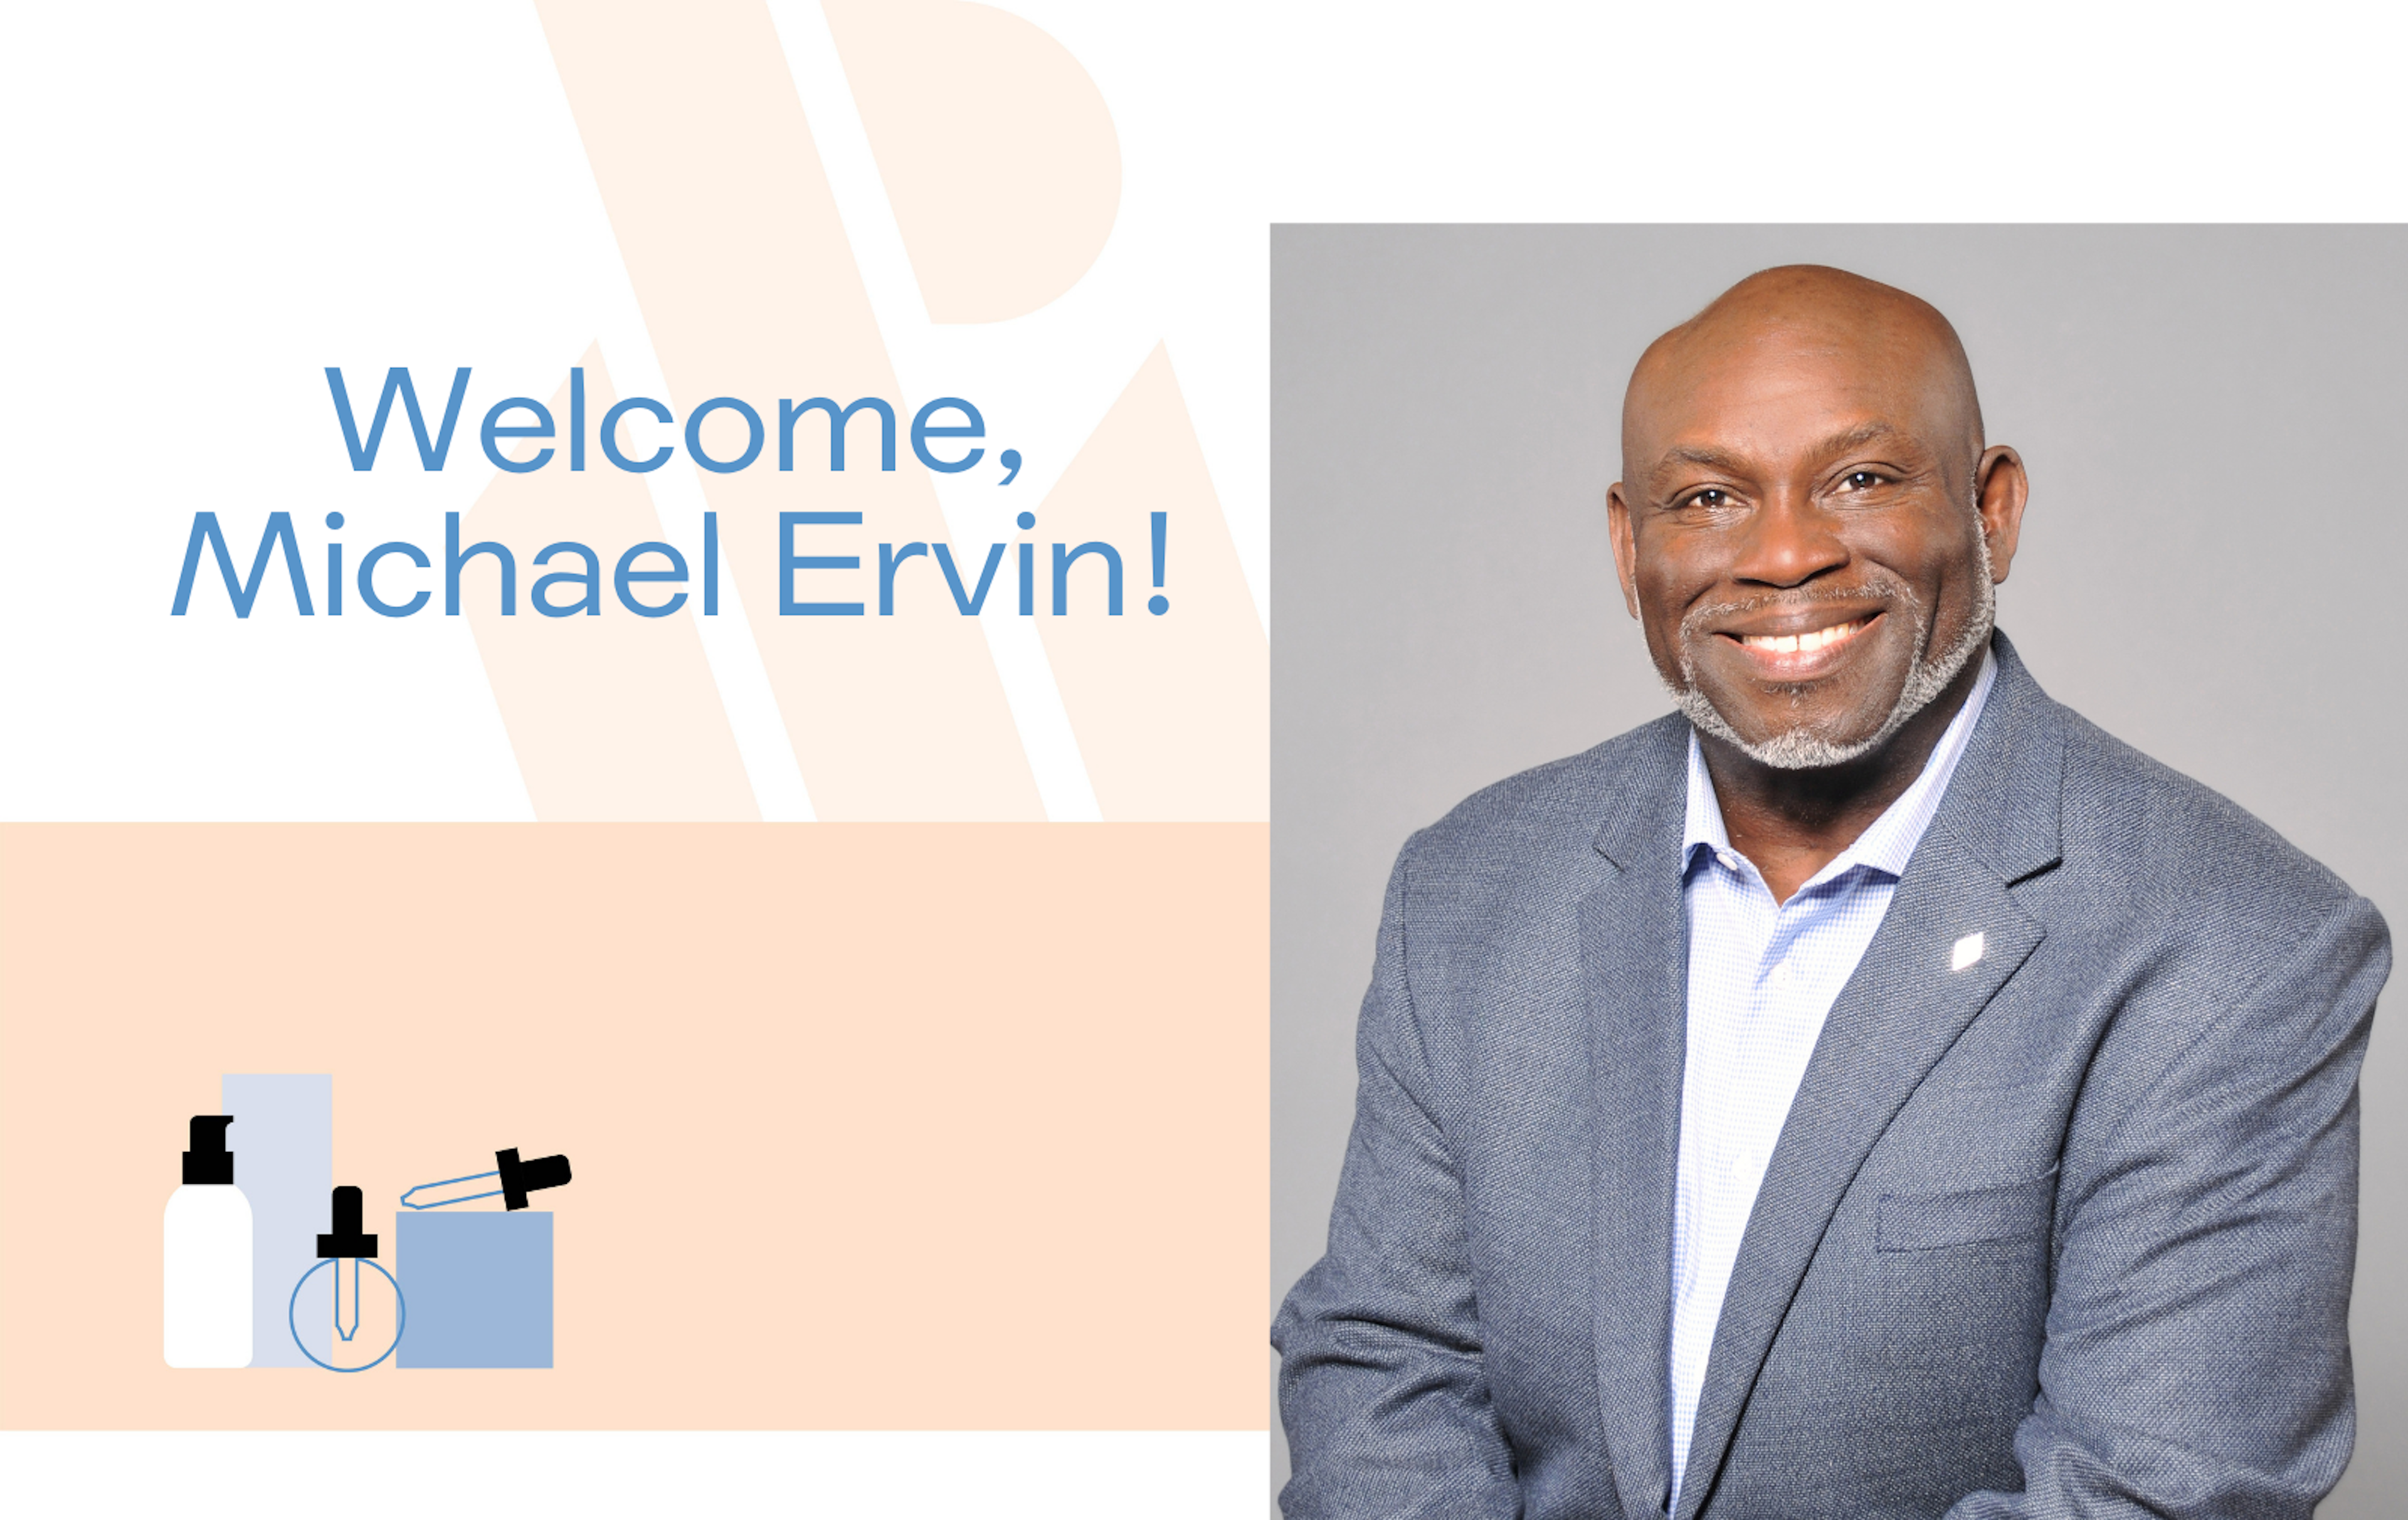 Welcome, Michael Ervin!